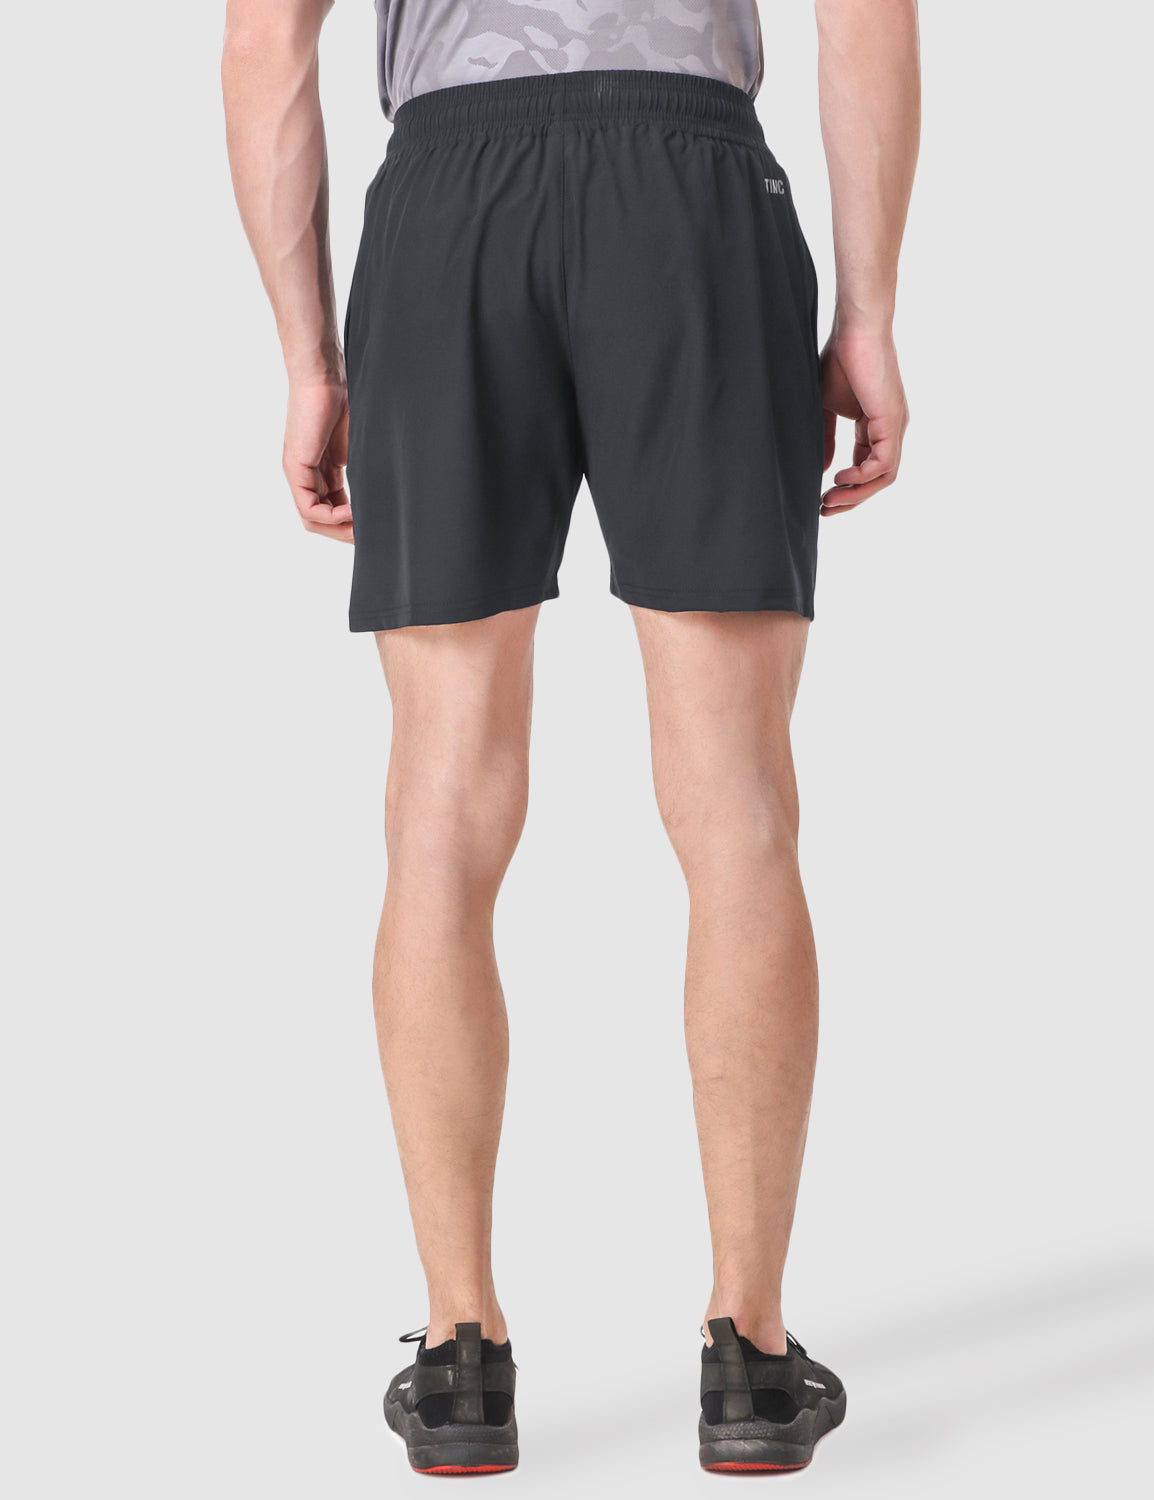 Fitinc Dark Grey Shorts for Men with Zipper Pockets – FITINC